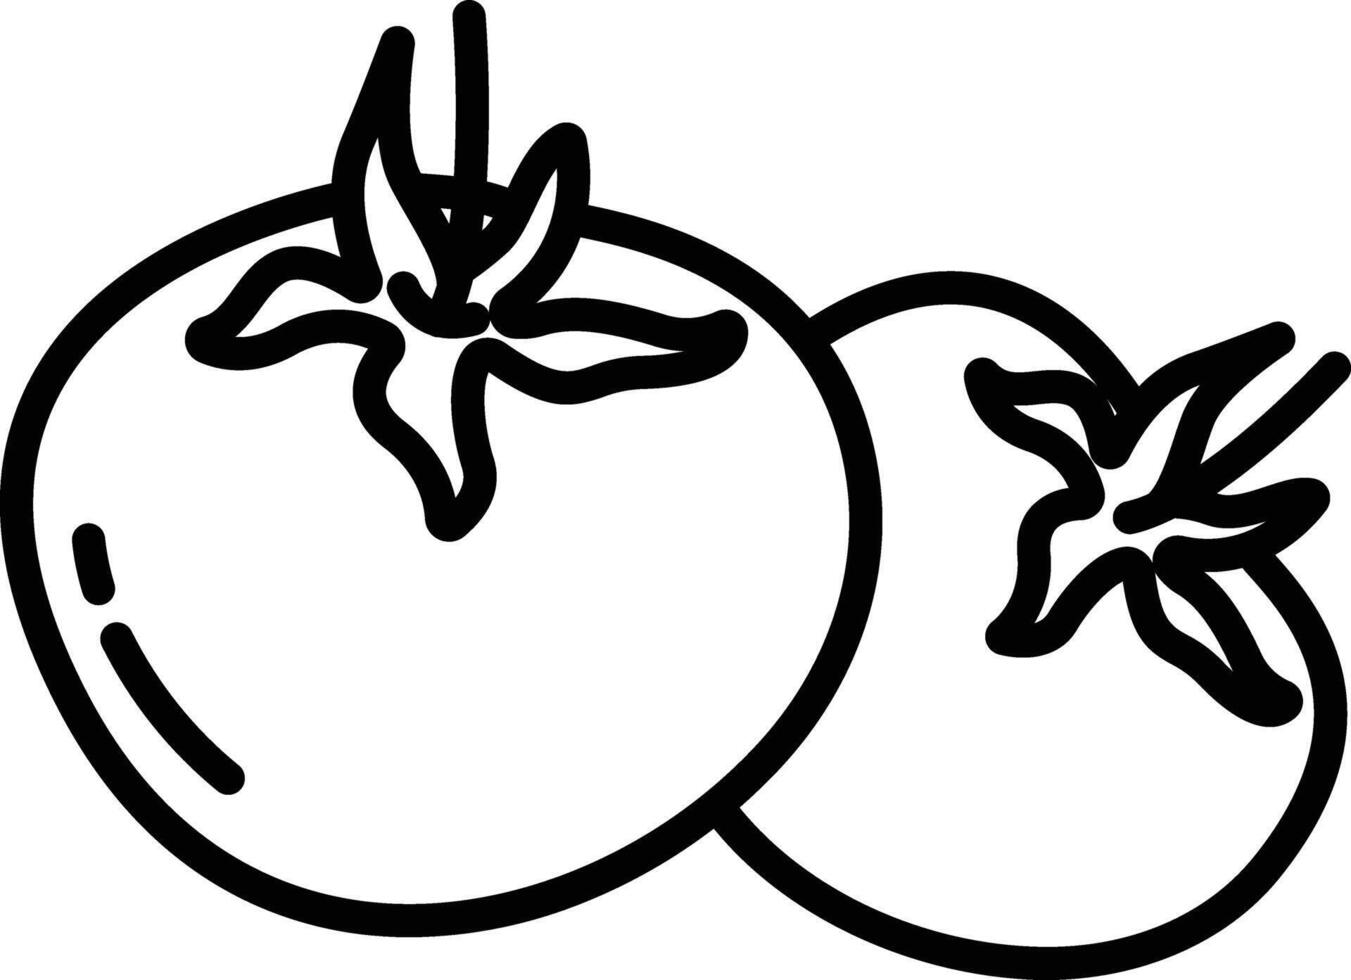 Tomato outline illustration vector